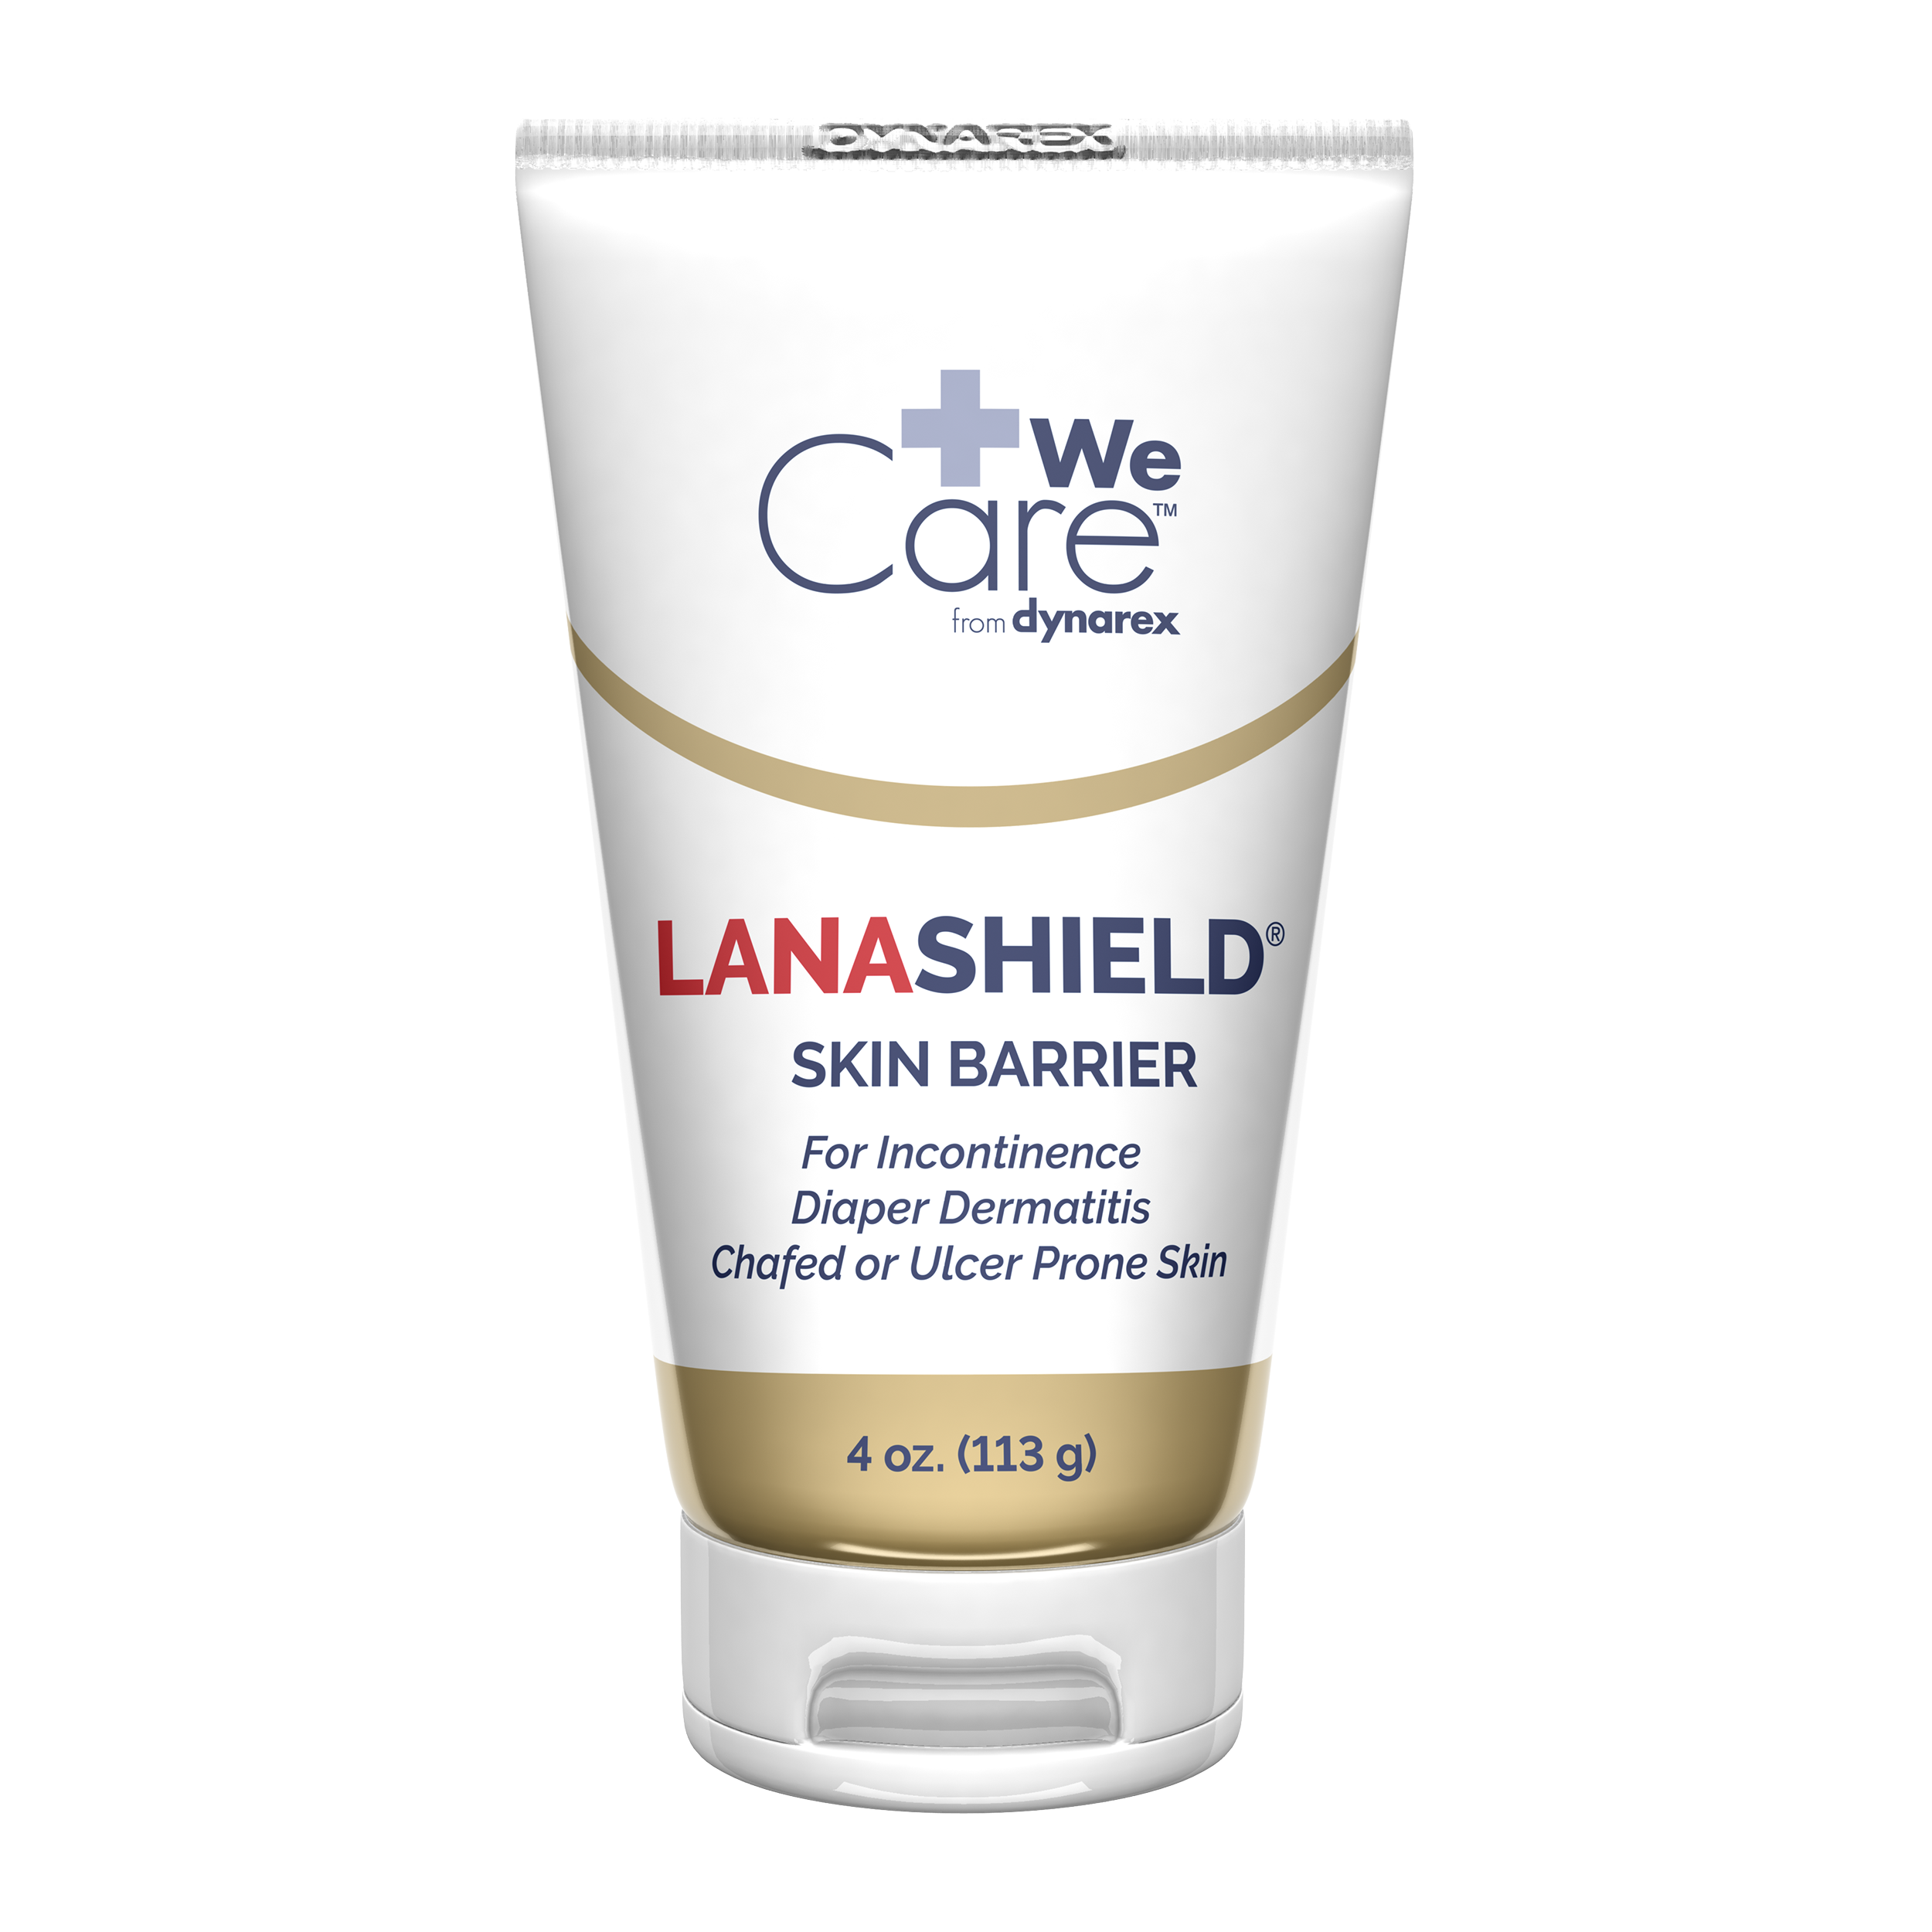 Dynarex® LanaShield Skin Protectant Cream compares to Lantiseptic